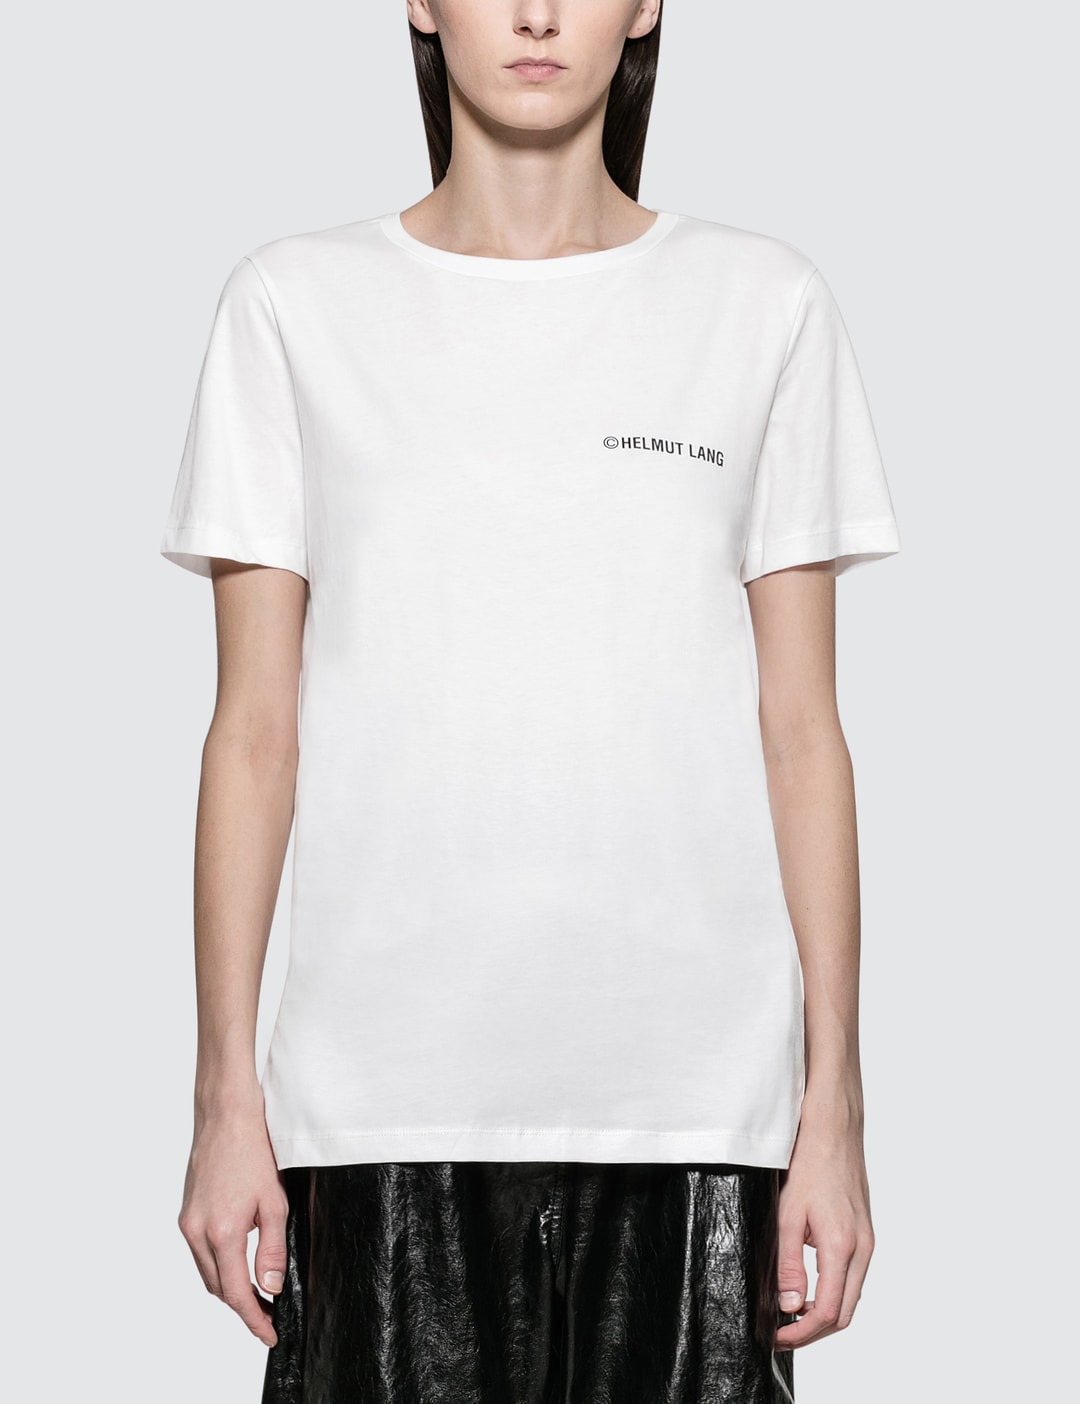 Helmut Lang - Logo Short Sleeve T-shirt | HBX - Globally Curated ...